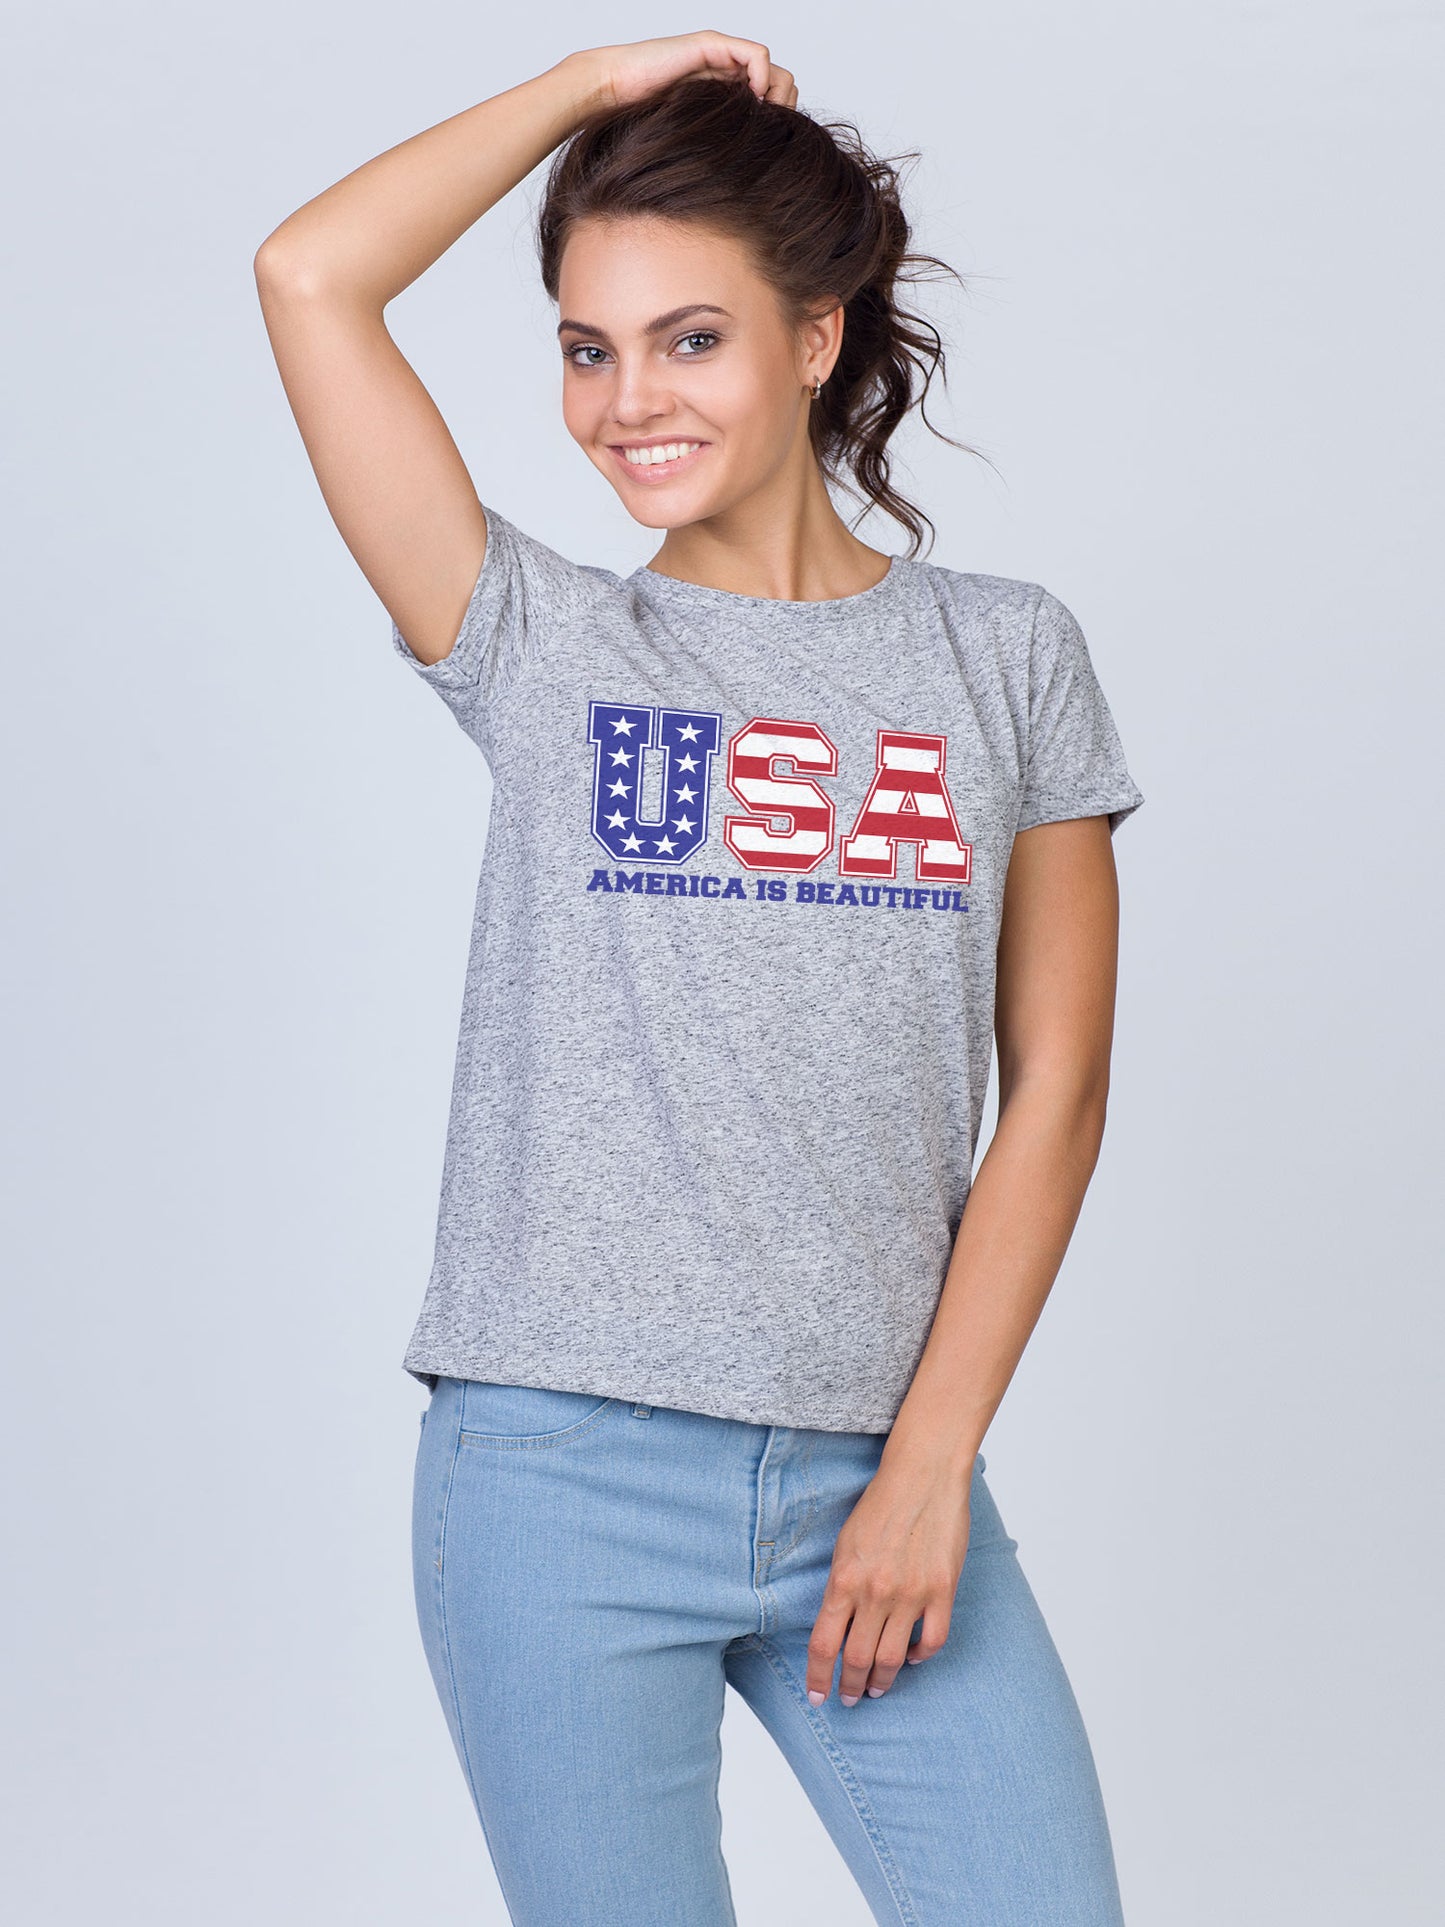 USA Men’s Women’s Unisex Grey Graphic T-shirt by America The Beautiful